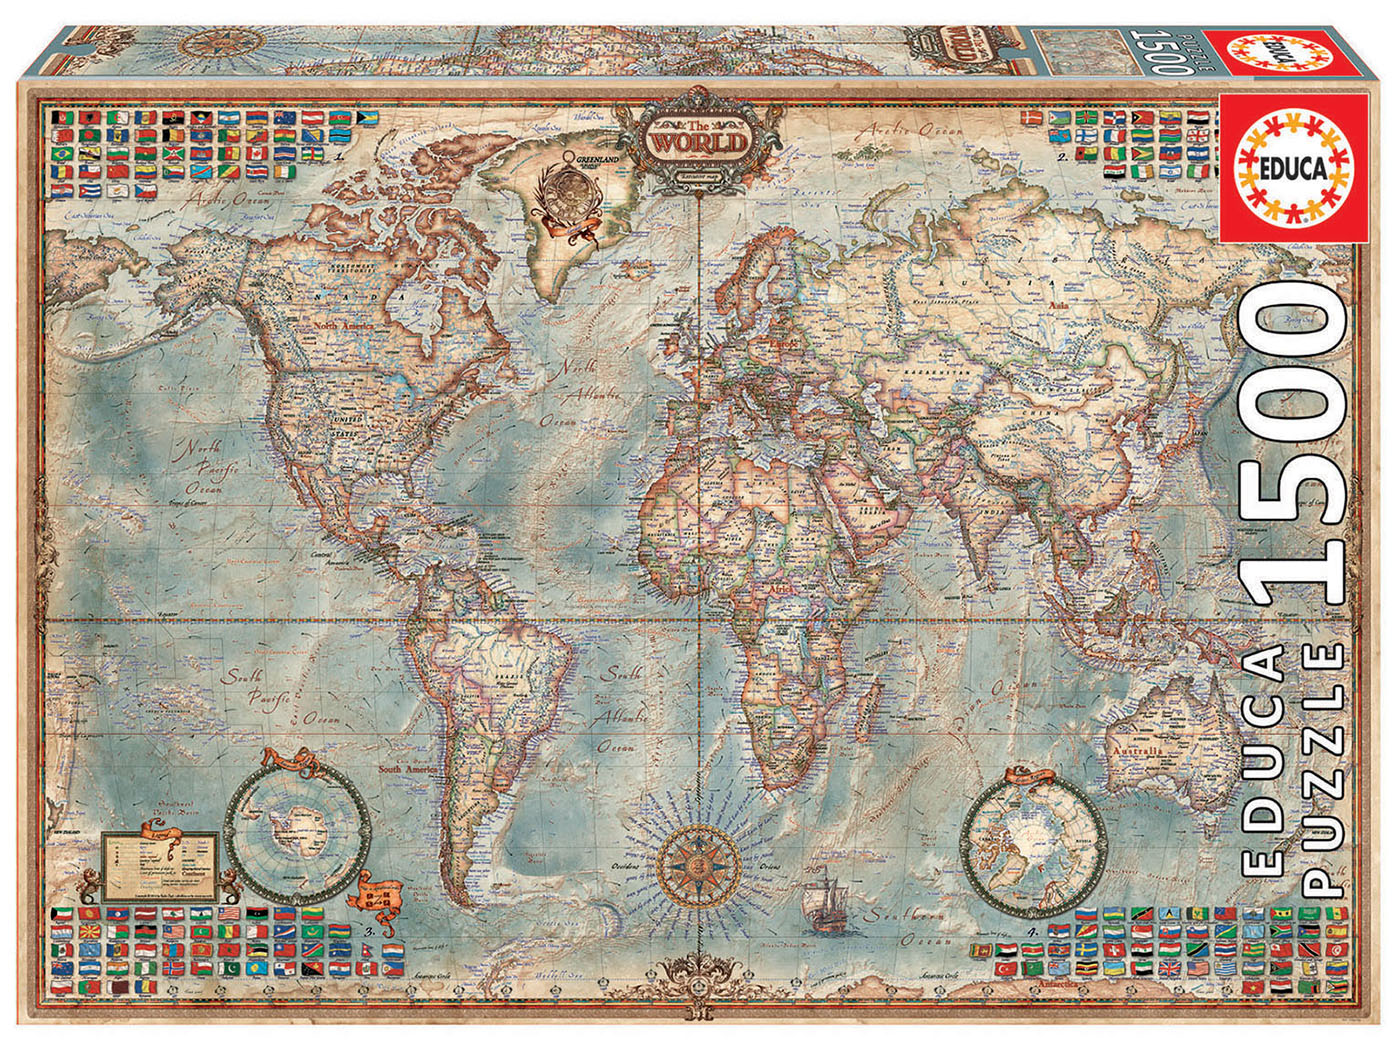 1500 Le monde, carte politique